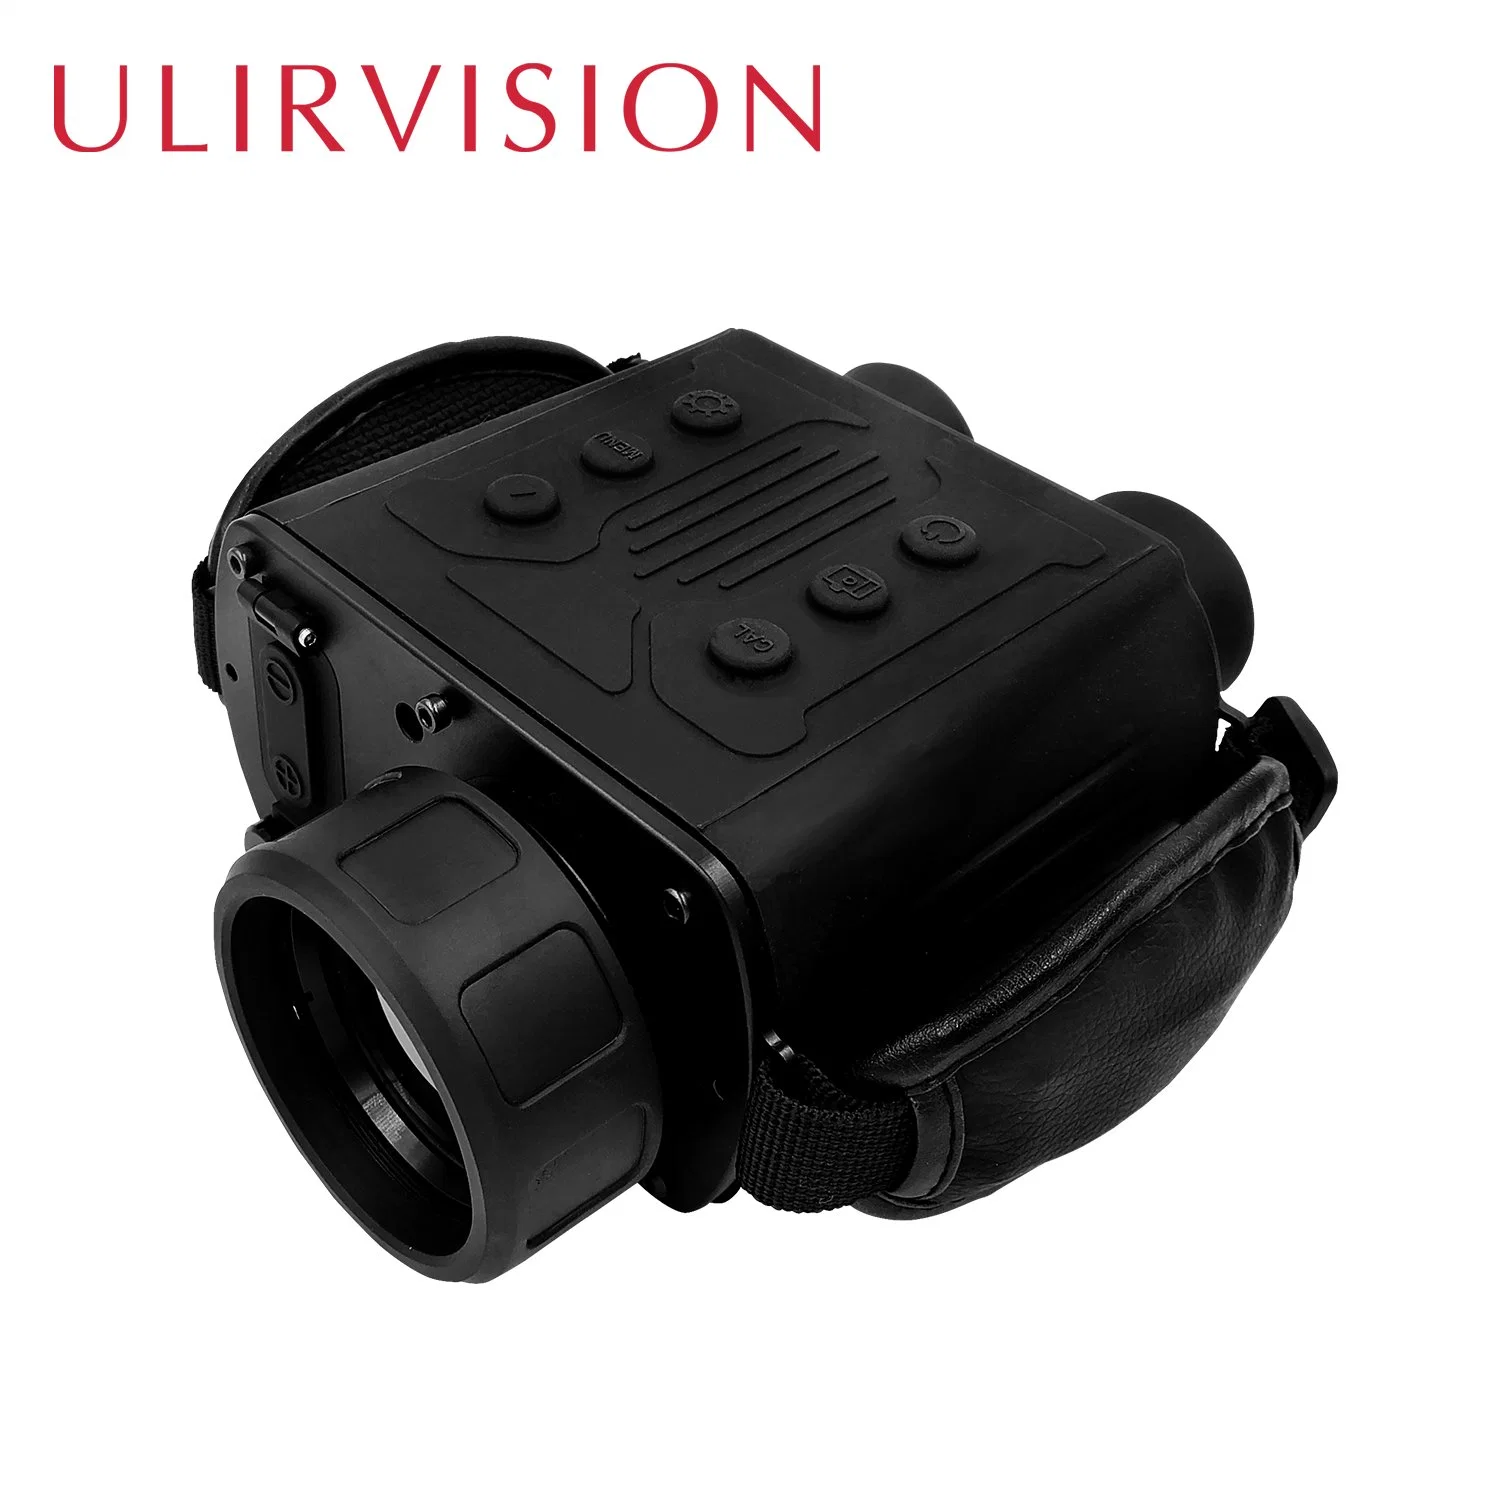 Good Quality Thermal Imaging Binocular Wolf30|Wolf60 Ulirvision